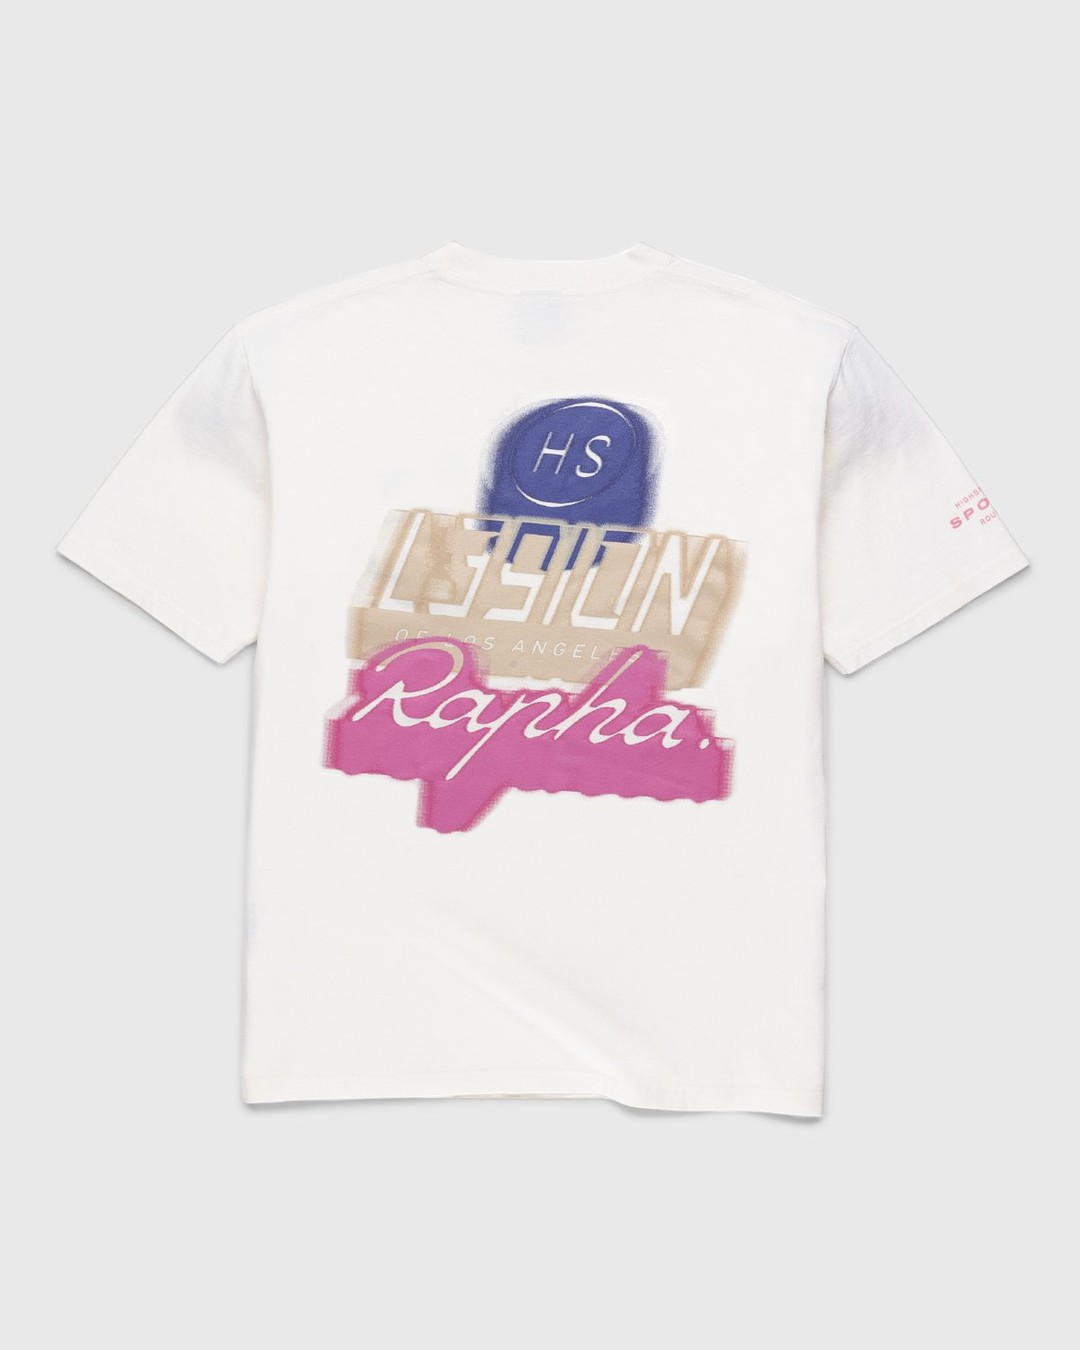 Rapha x L39ION of LA x Highsnobiety – HS Sports T-Shirt White - T-shirts - White - Image 1